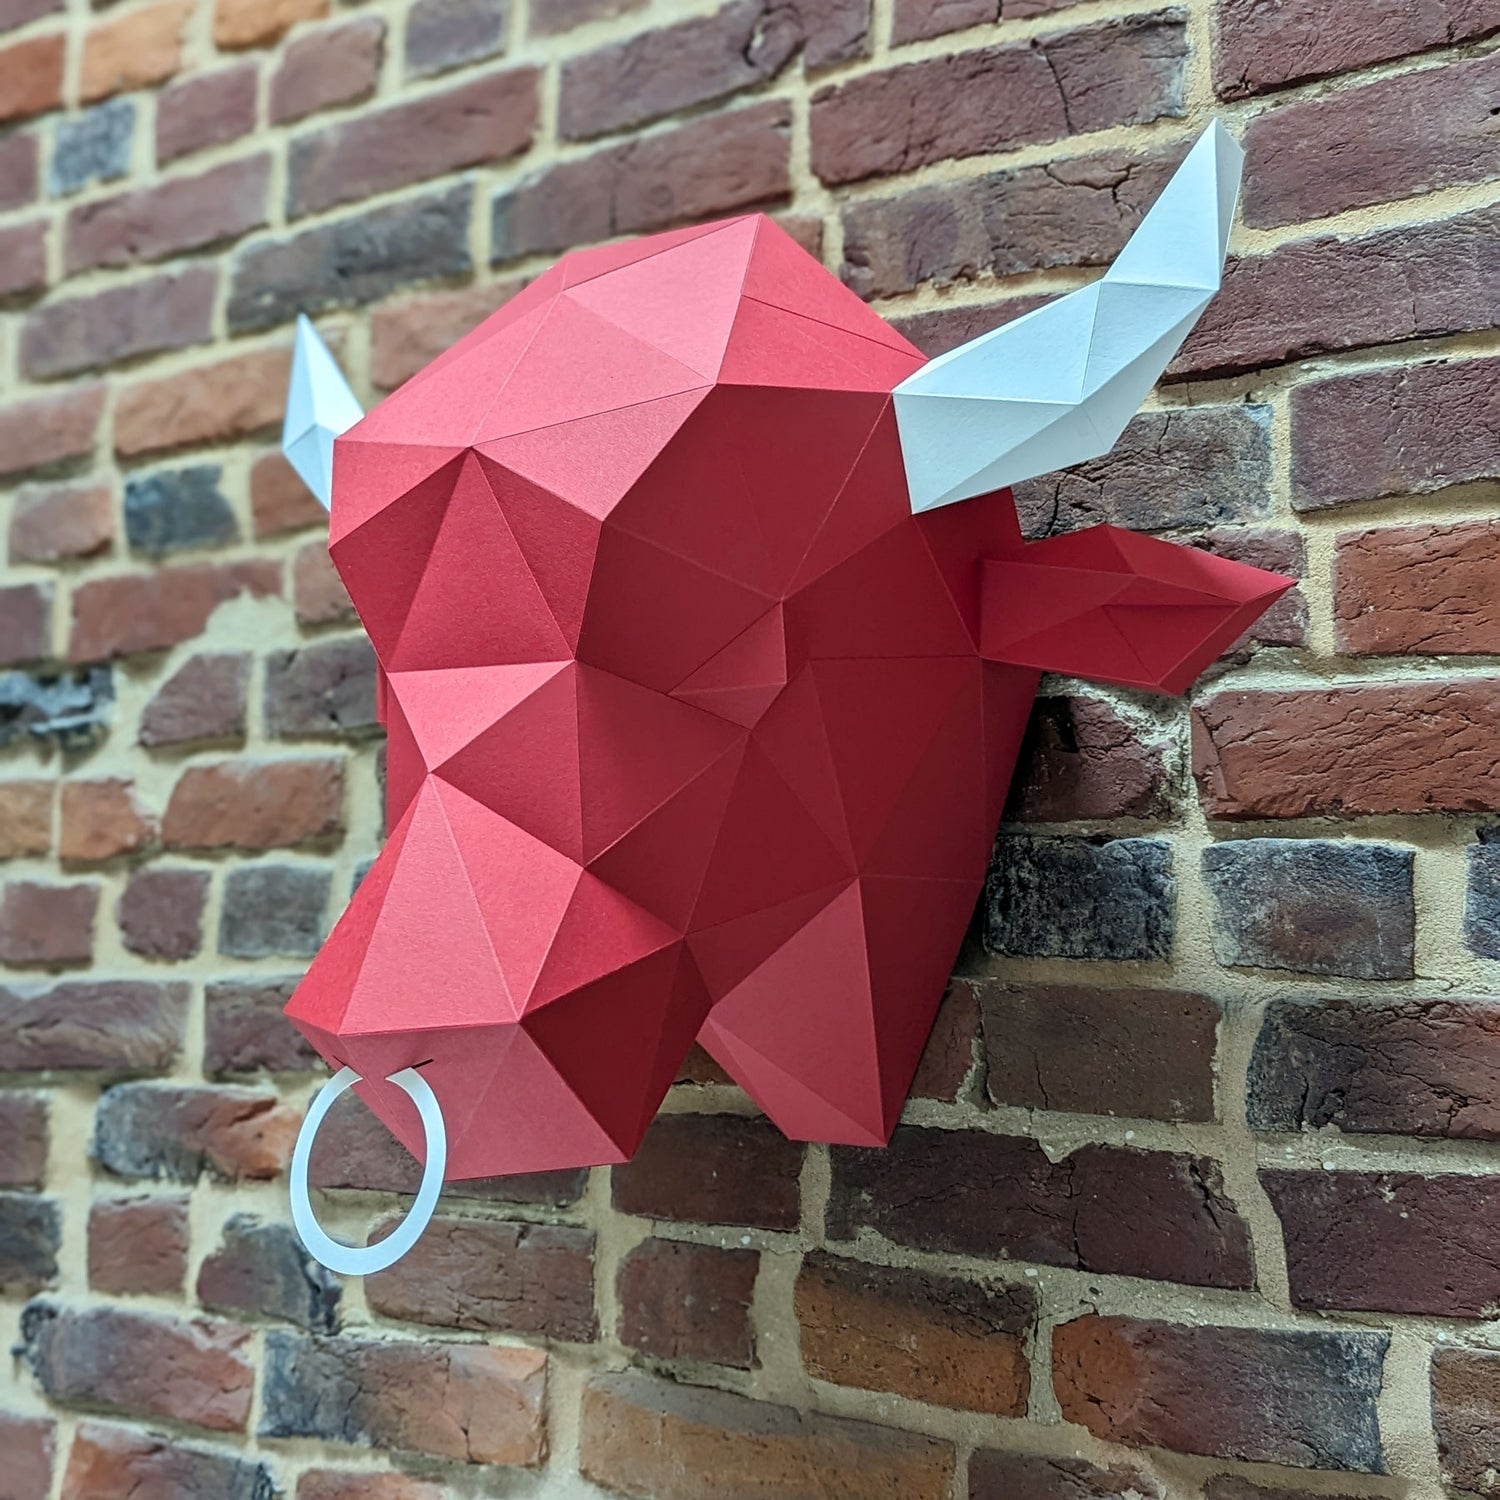 Simon the Bull | DIY Paper Craft Animal Kit